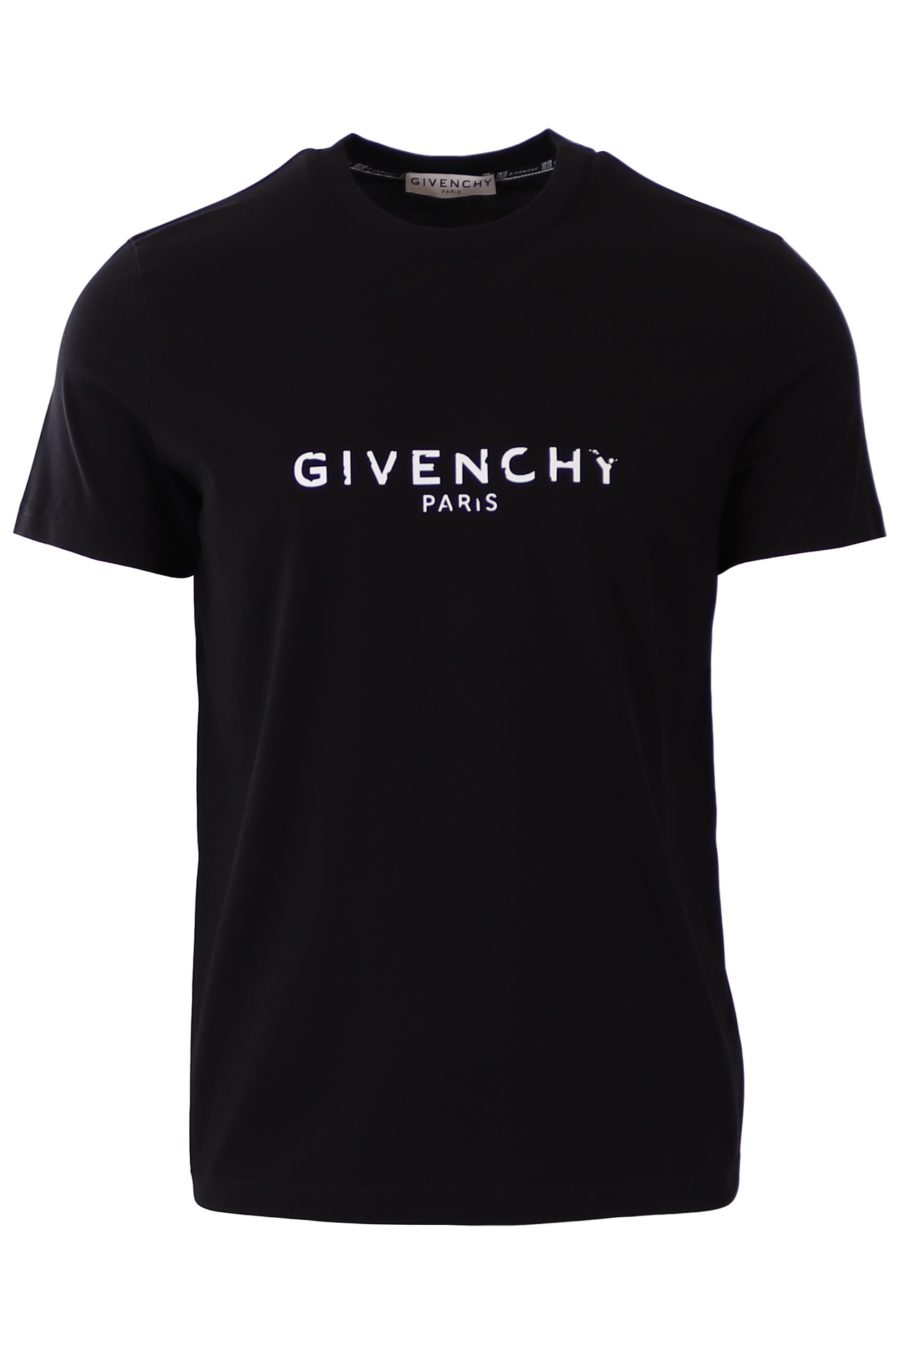 Camiseta Givenchy Paris negra slim fit - 75b20a6c0b19f1ac411df0cae6c02b08ce7f778d